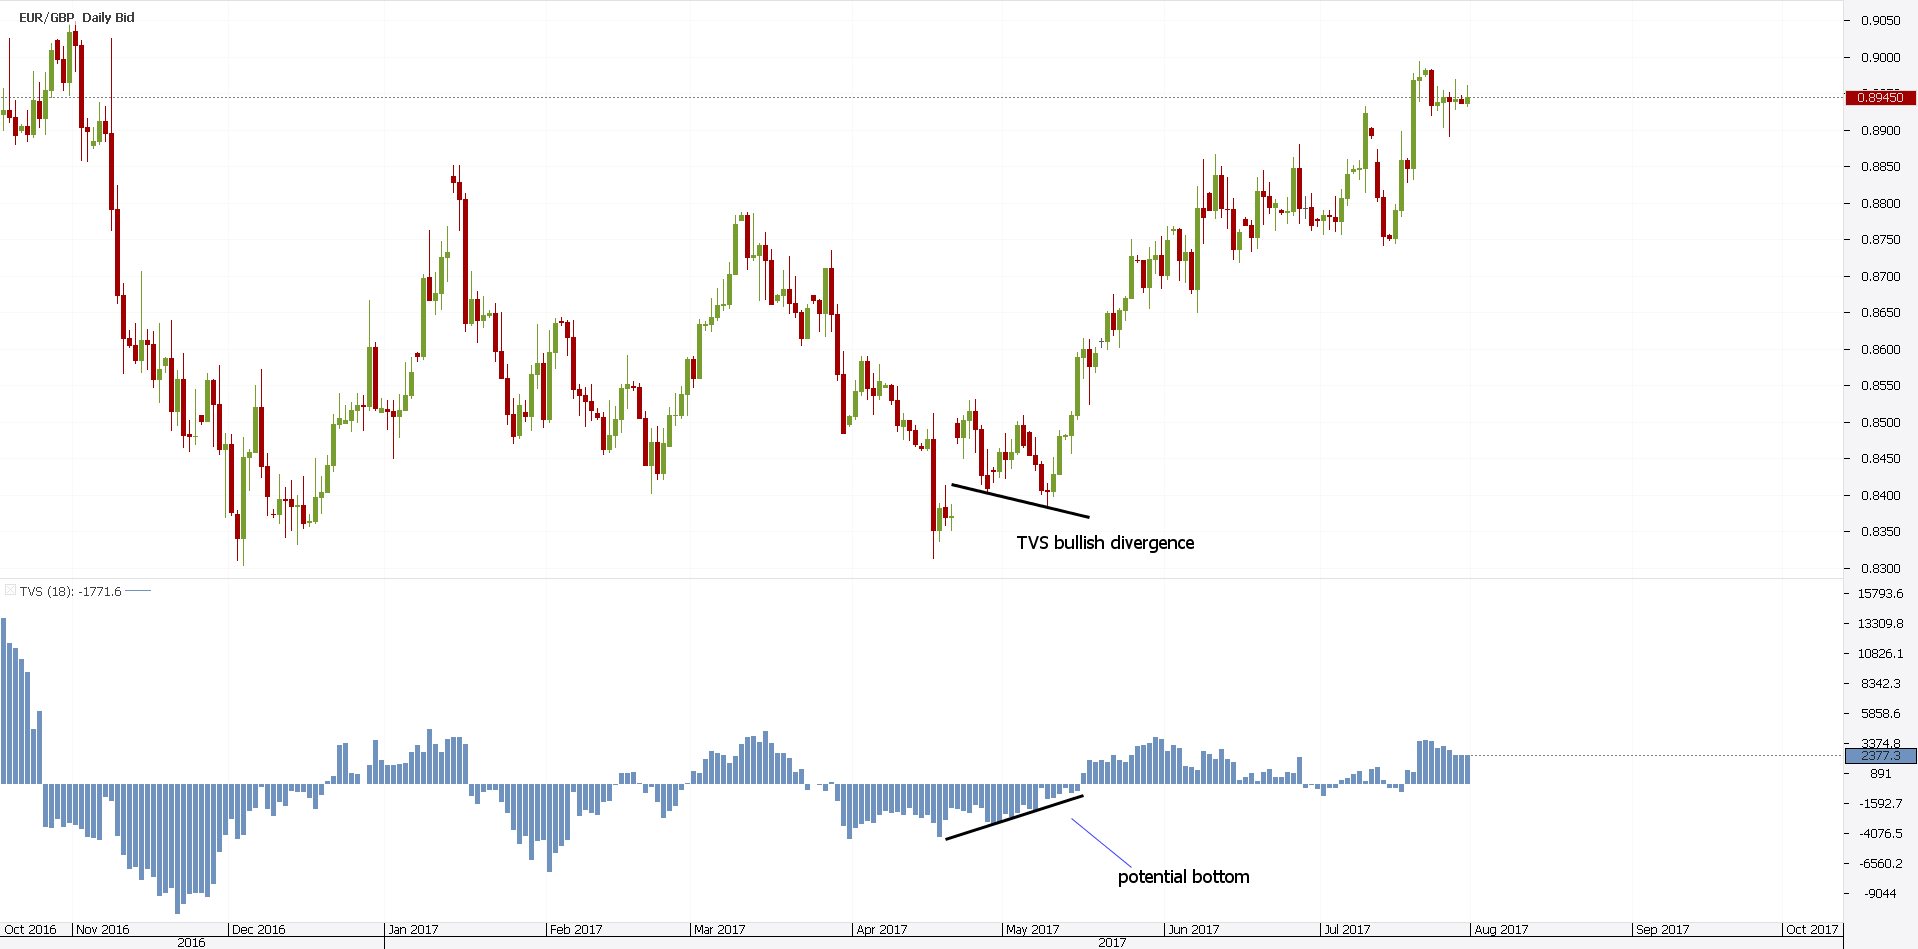 Best forex volume tradingview indicators